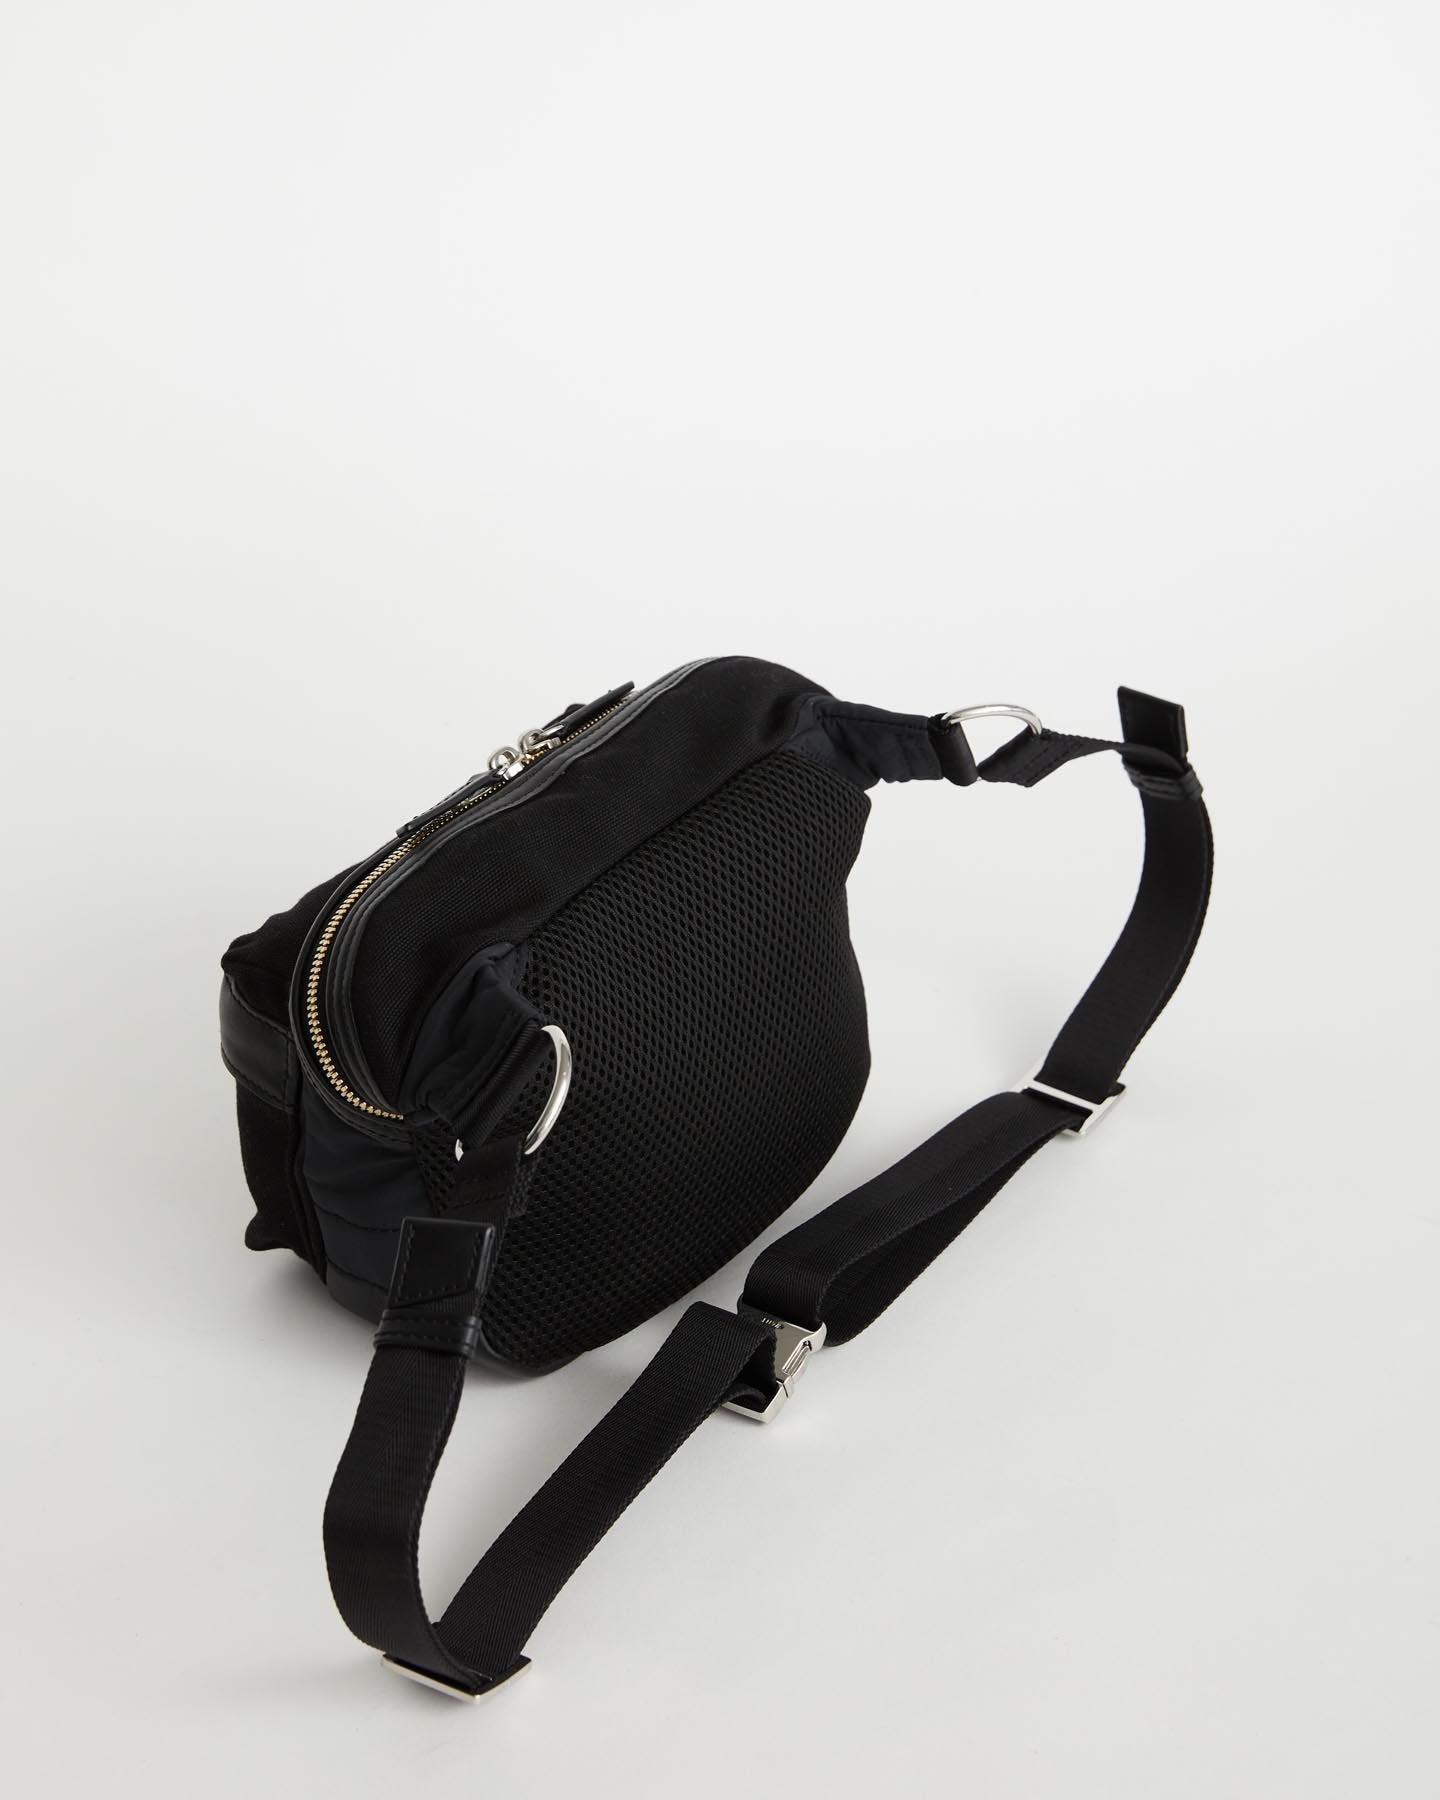 WANT Les Essentiels - WANT ORGANIC® Tacoma Cotton Belt Bag - Black